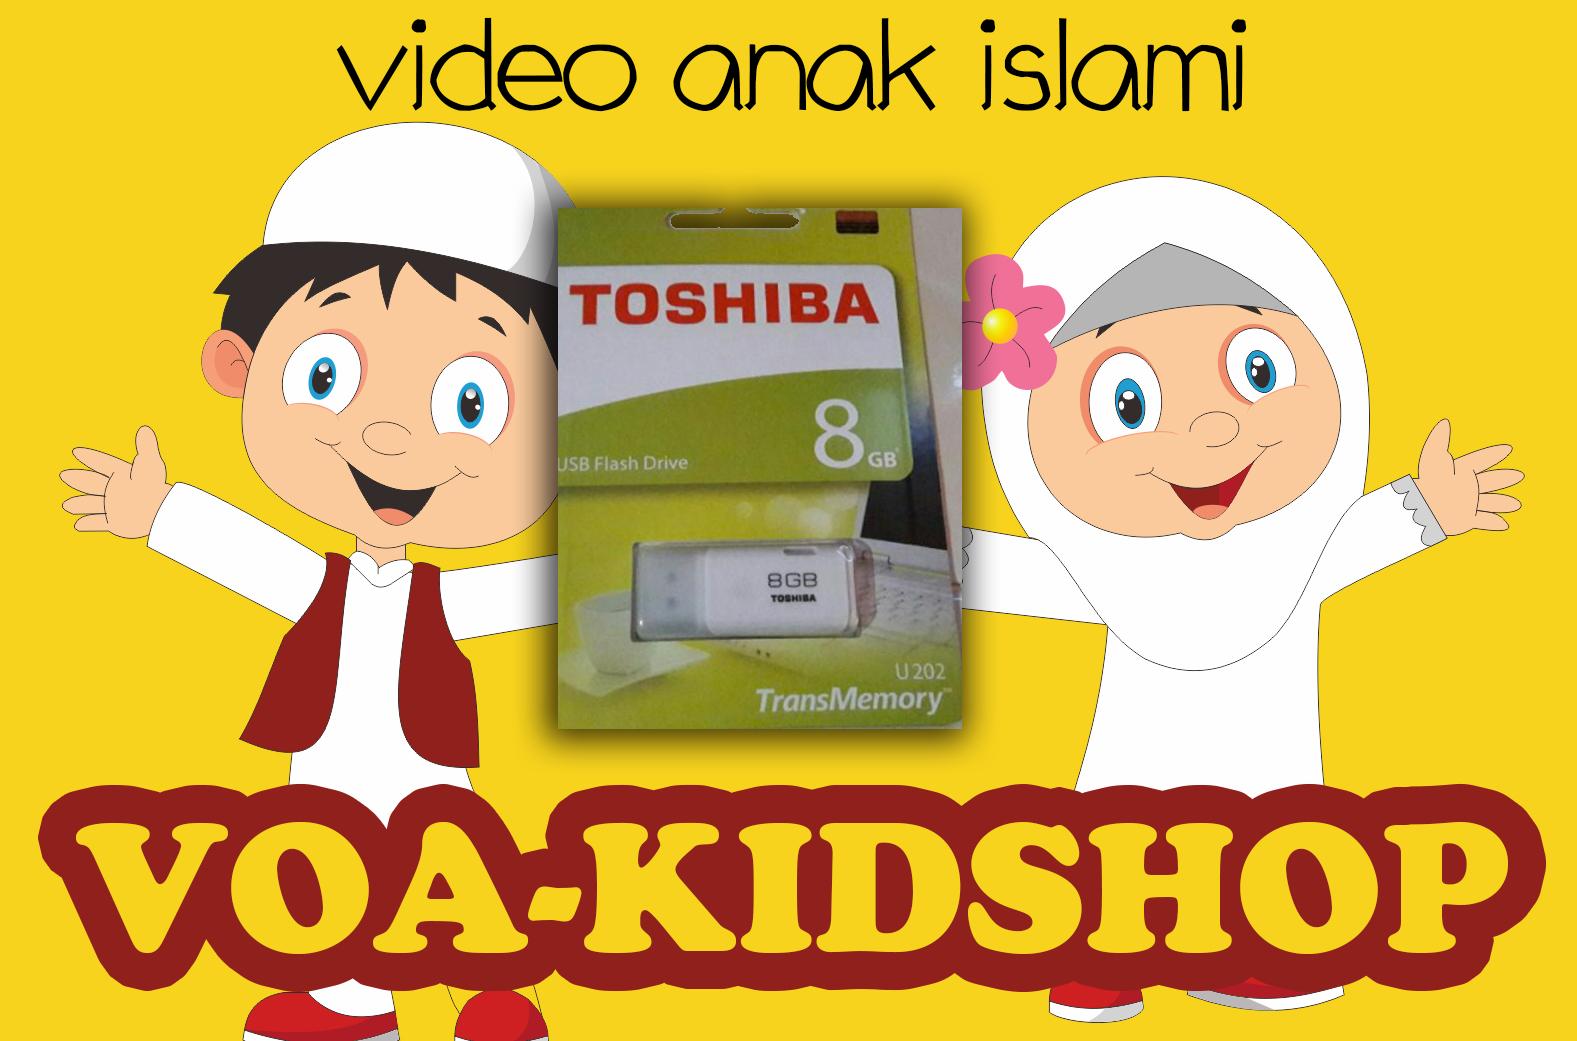 FLASHDISK VIDEO ANAK ISLAM Solusi Video Mendidik Anak Islami